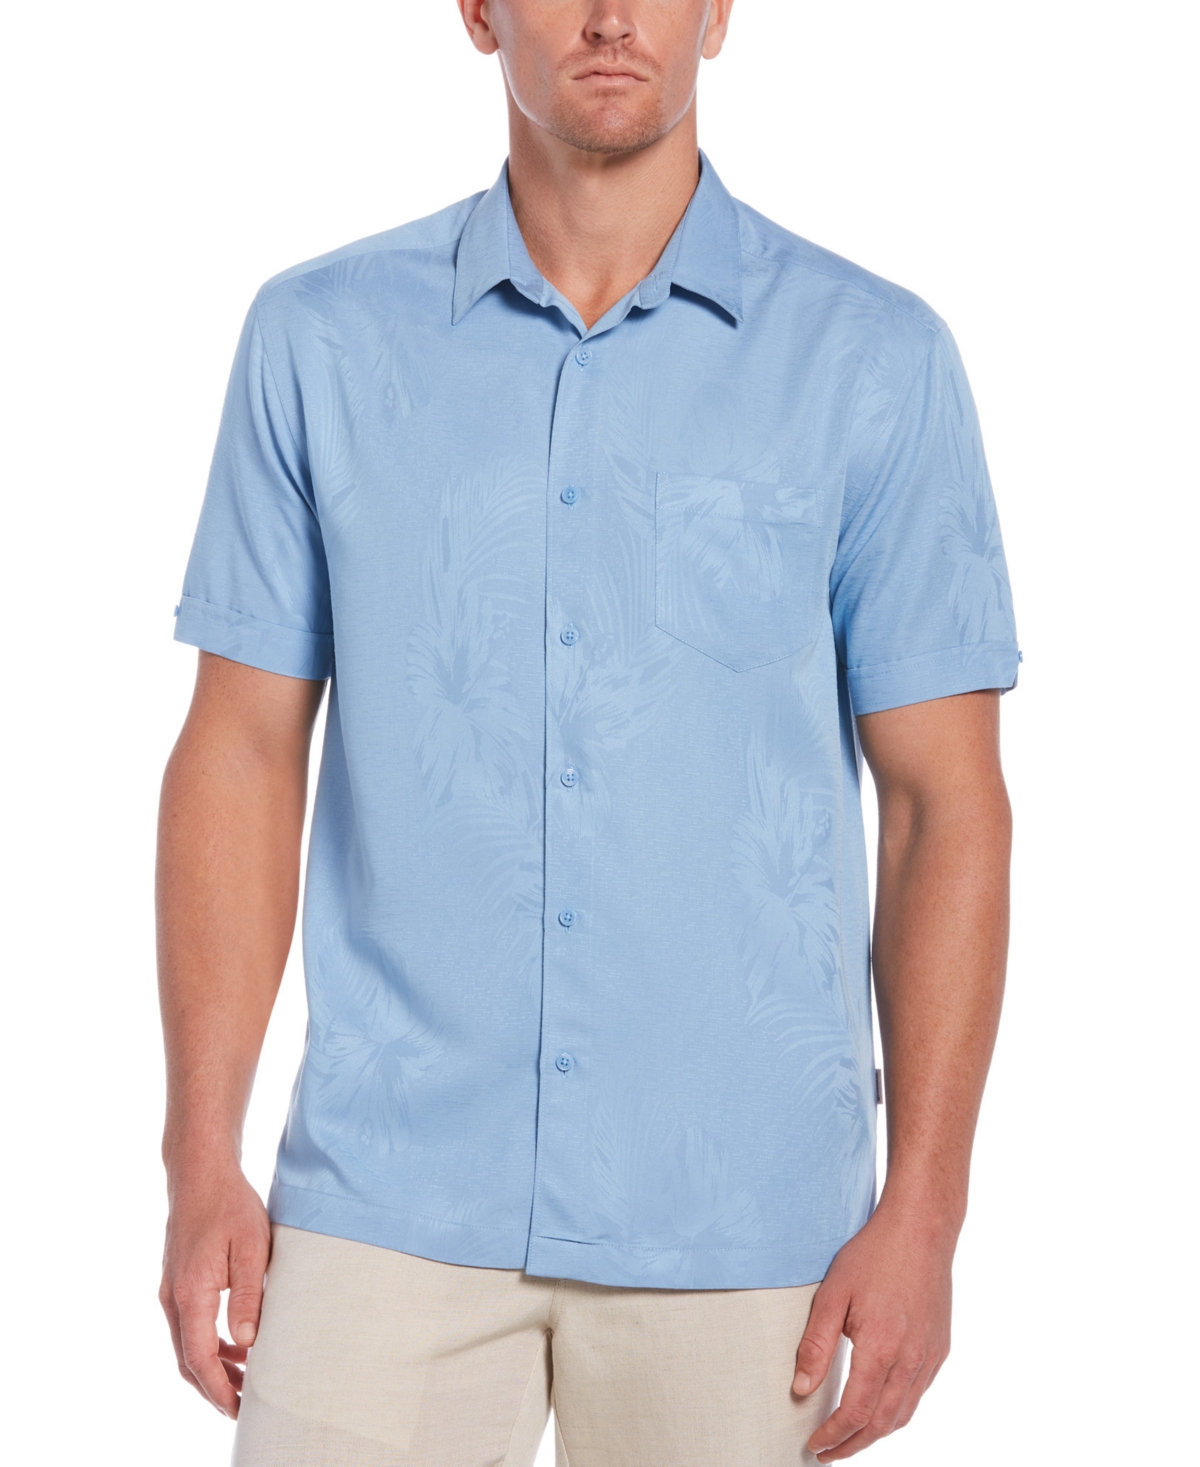 Men's Big & Tall Floral Textured Jacquard Short Sleeve Shirt - Allure